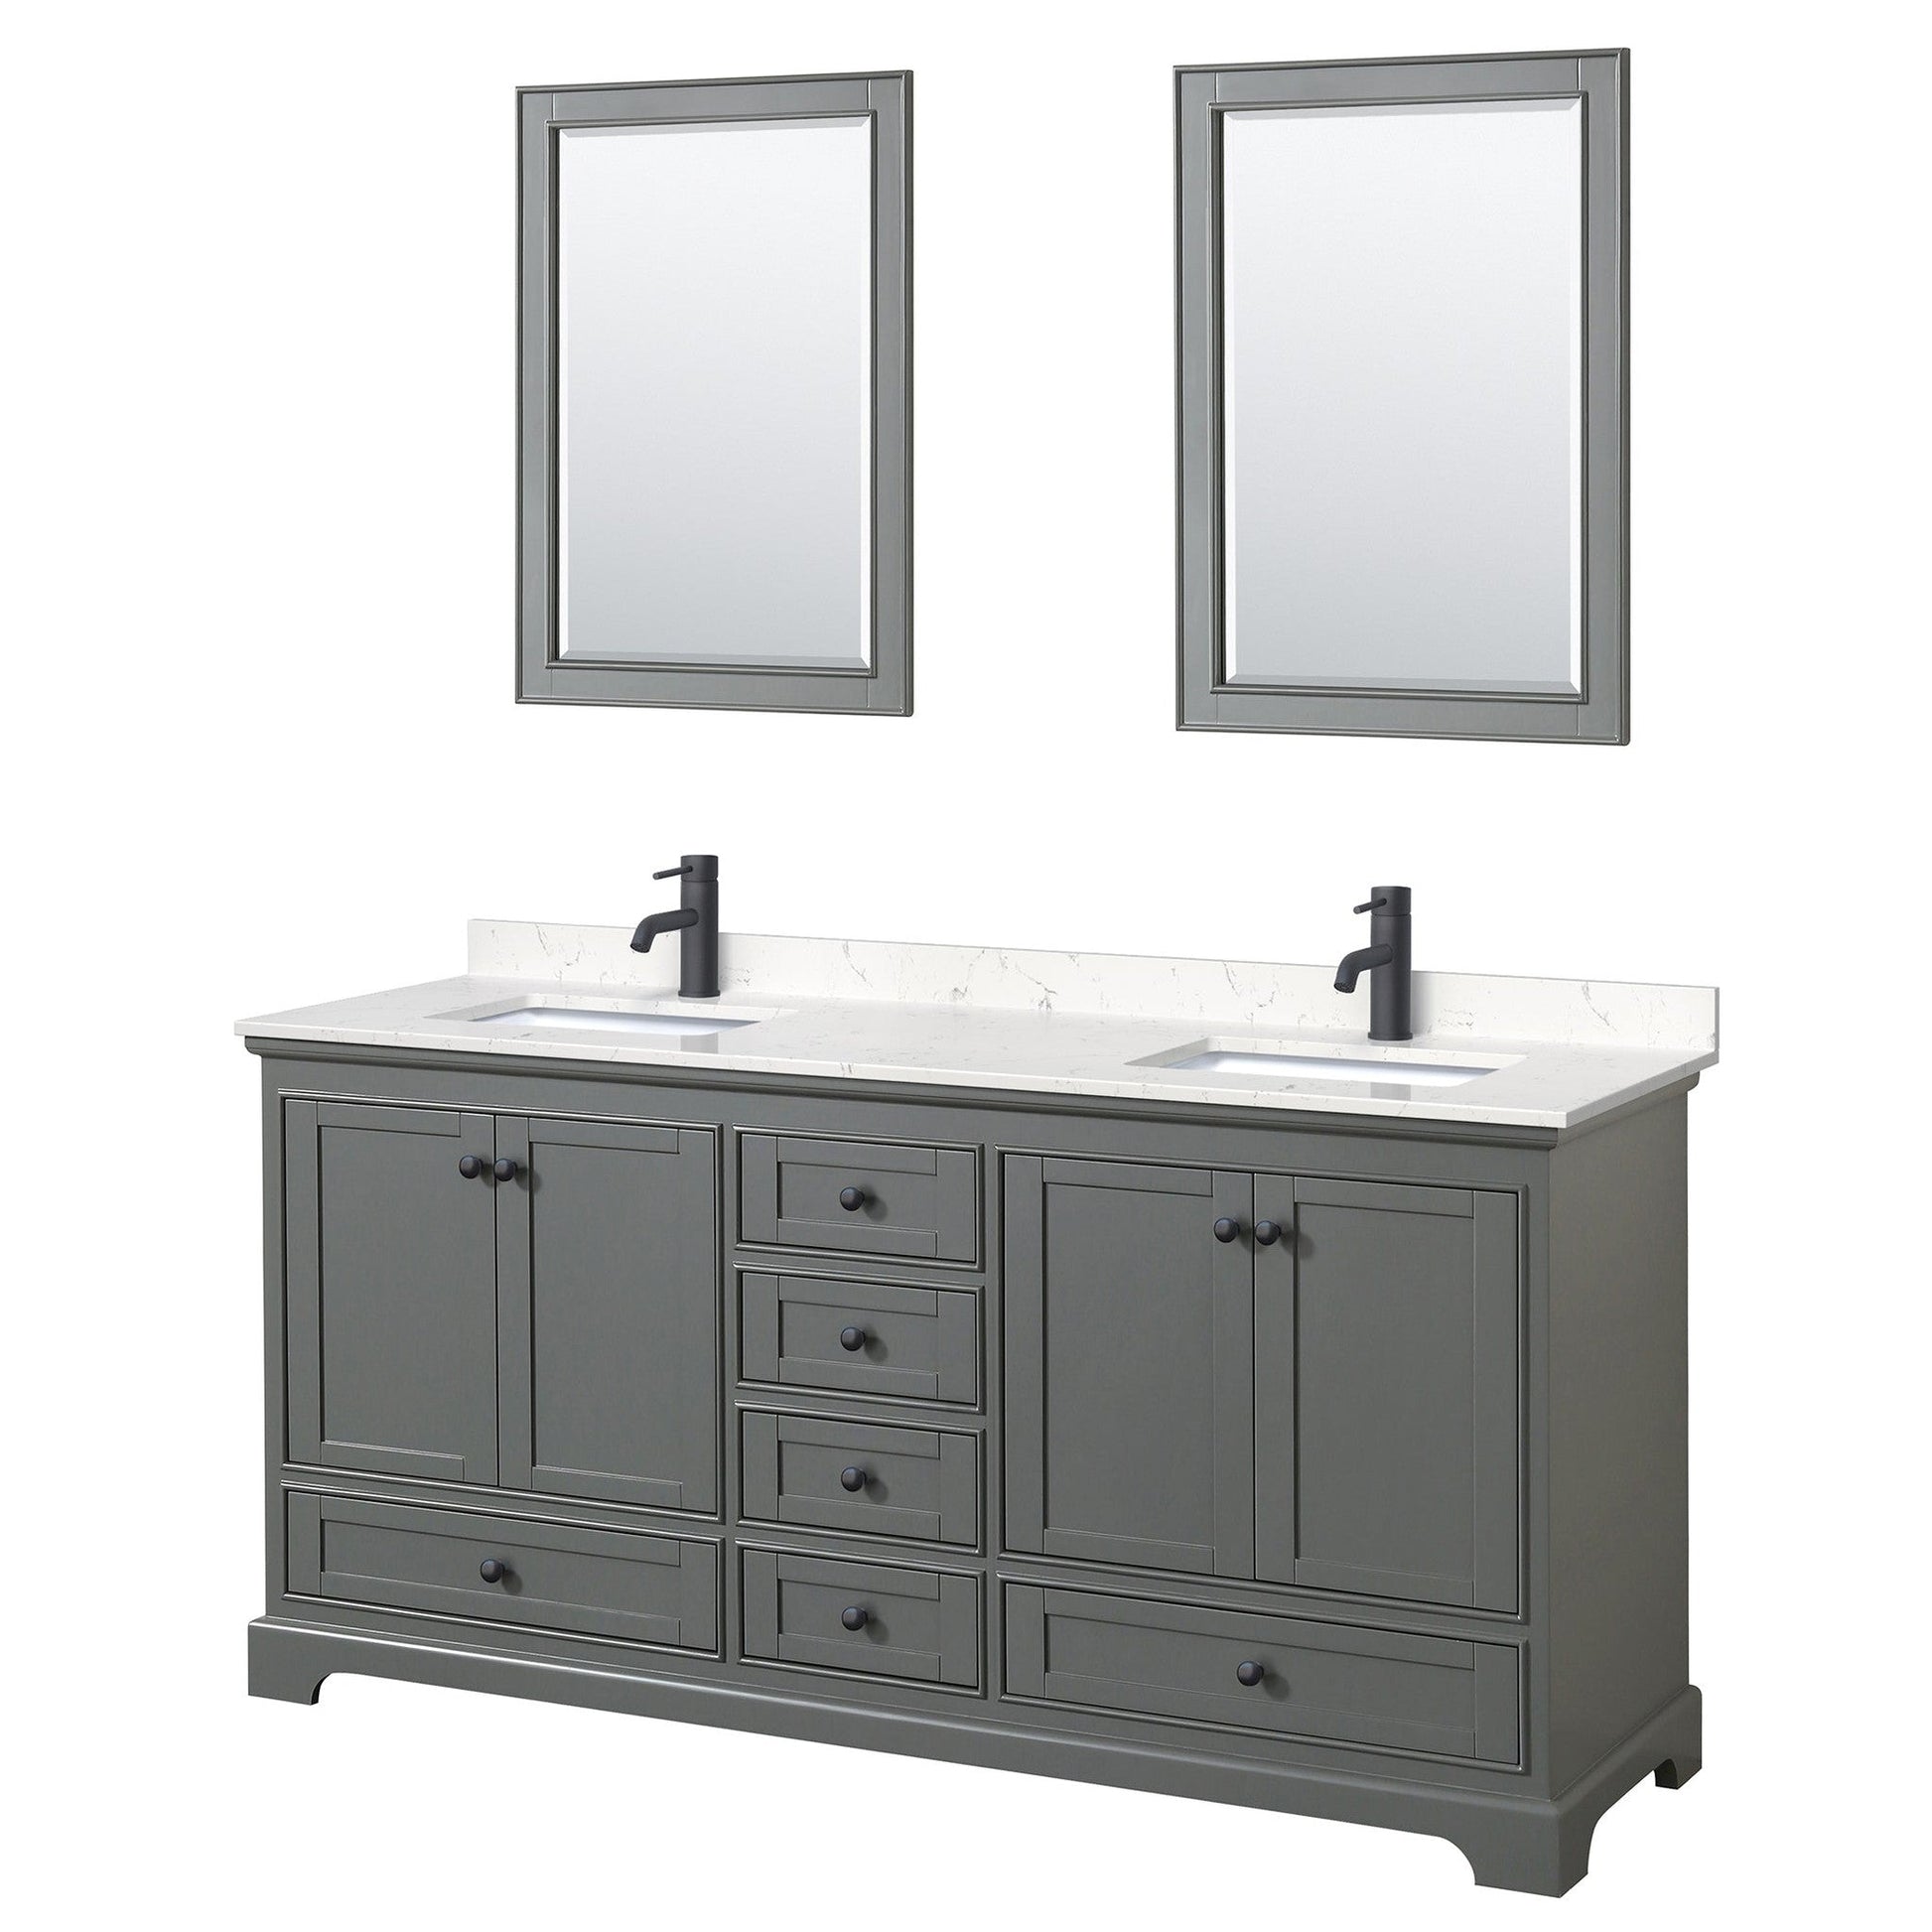 Deborah 72" Double Bathroom Vanity in Dark Gray, Carrara Cultured Marble Countertop, Undermount Square Sinks, Matte Black Trim, 24" Mirrors